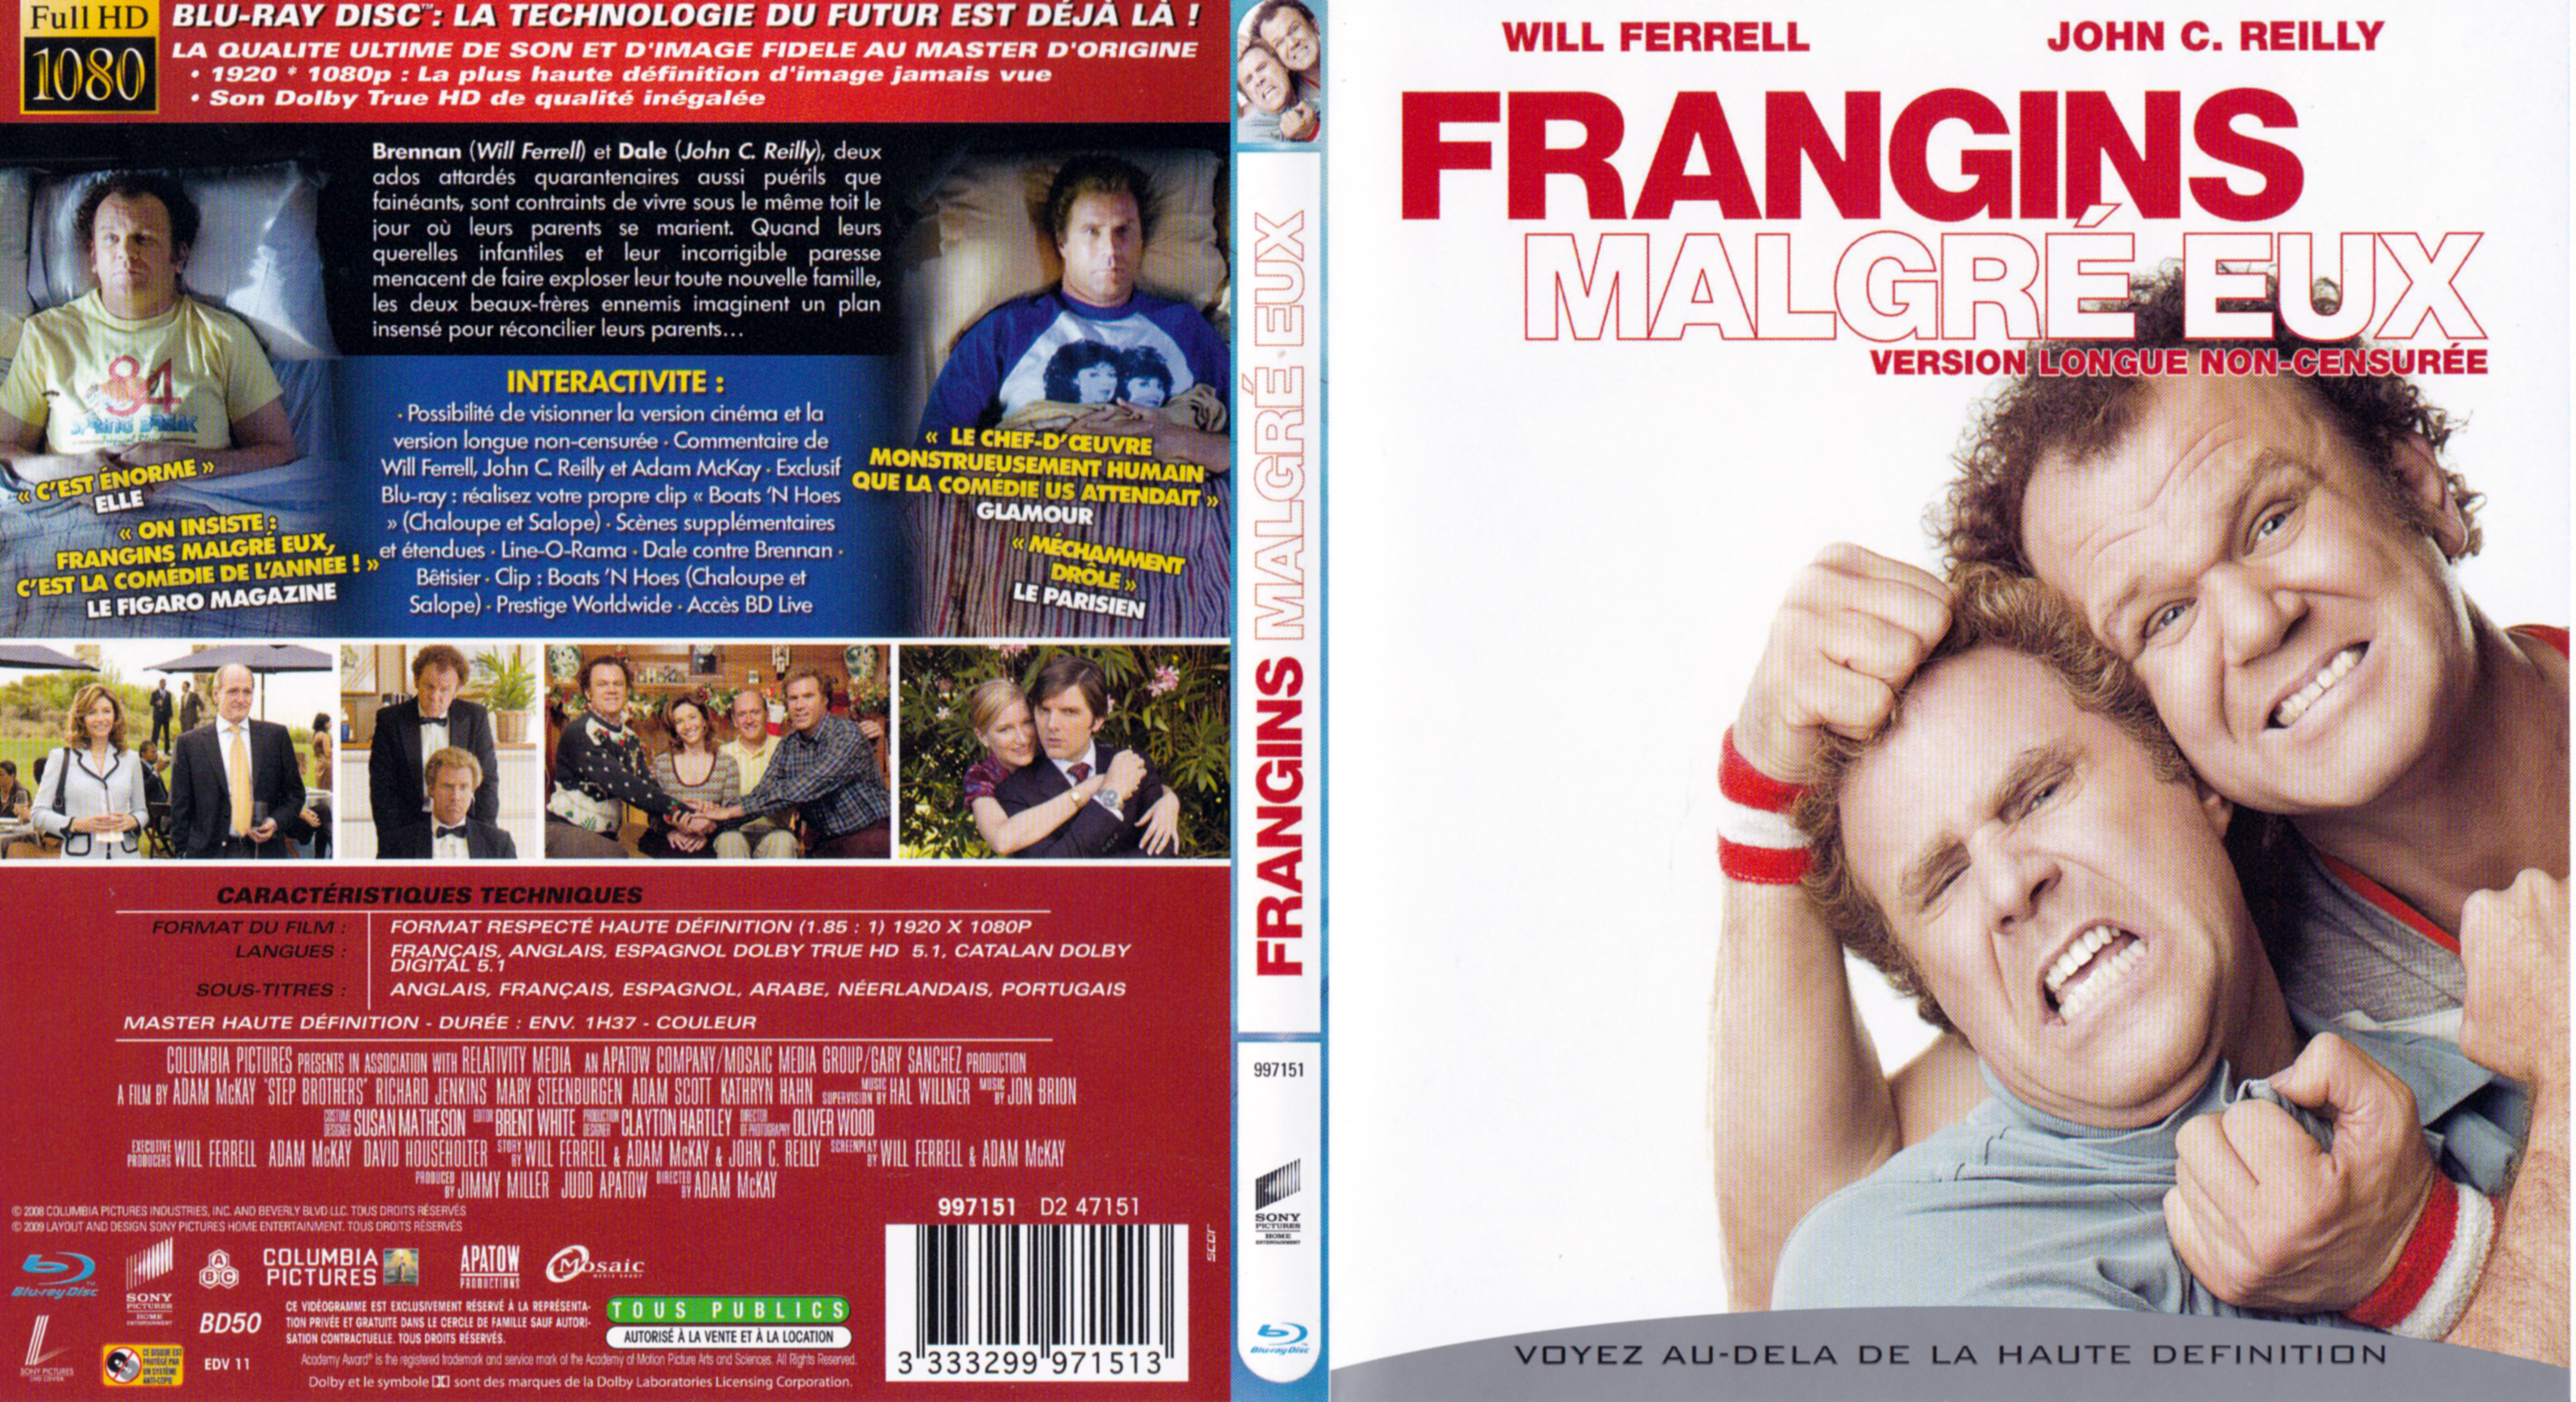 Jaquette DVD Frangins malgr eux (BLU-RAY)